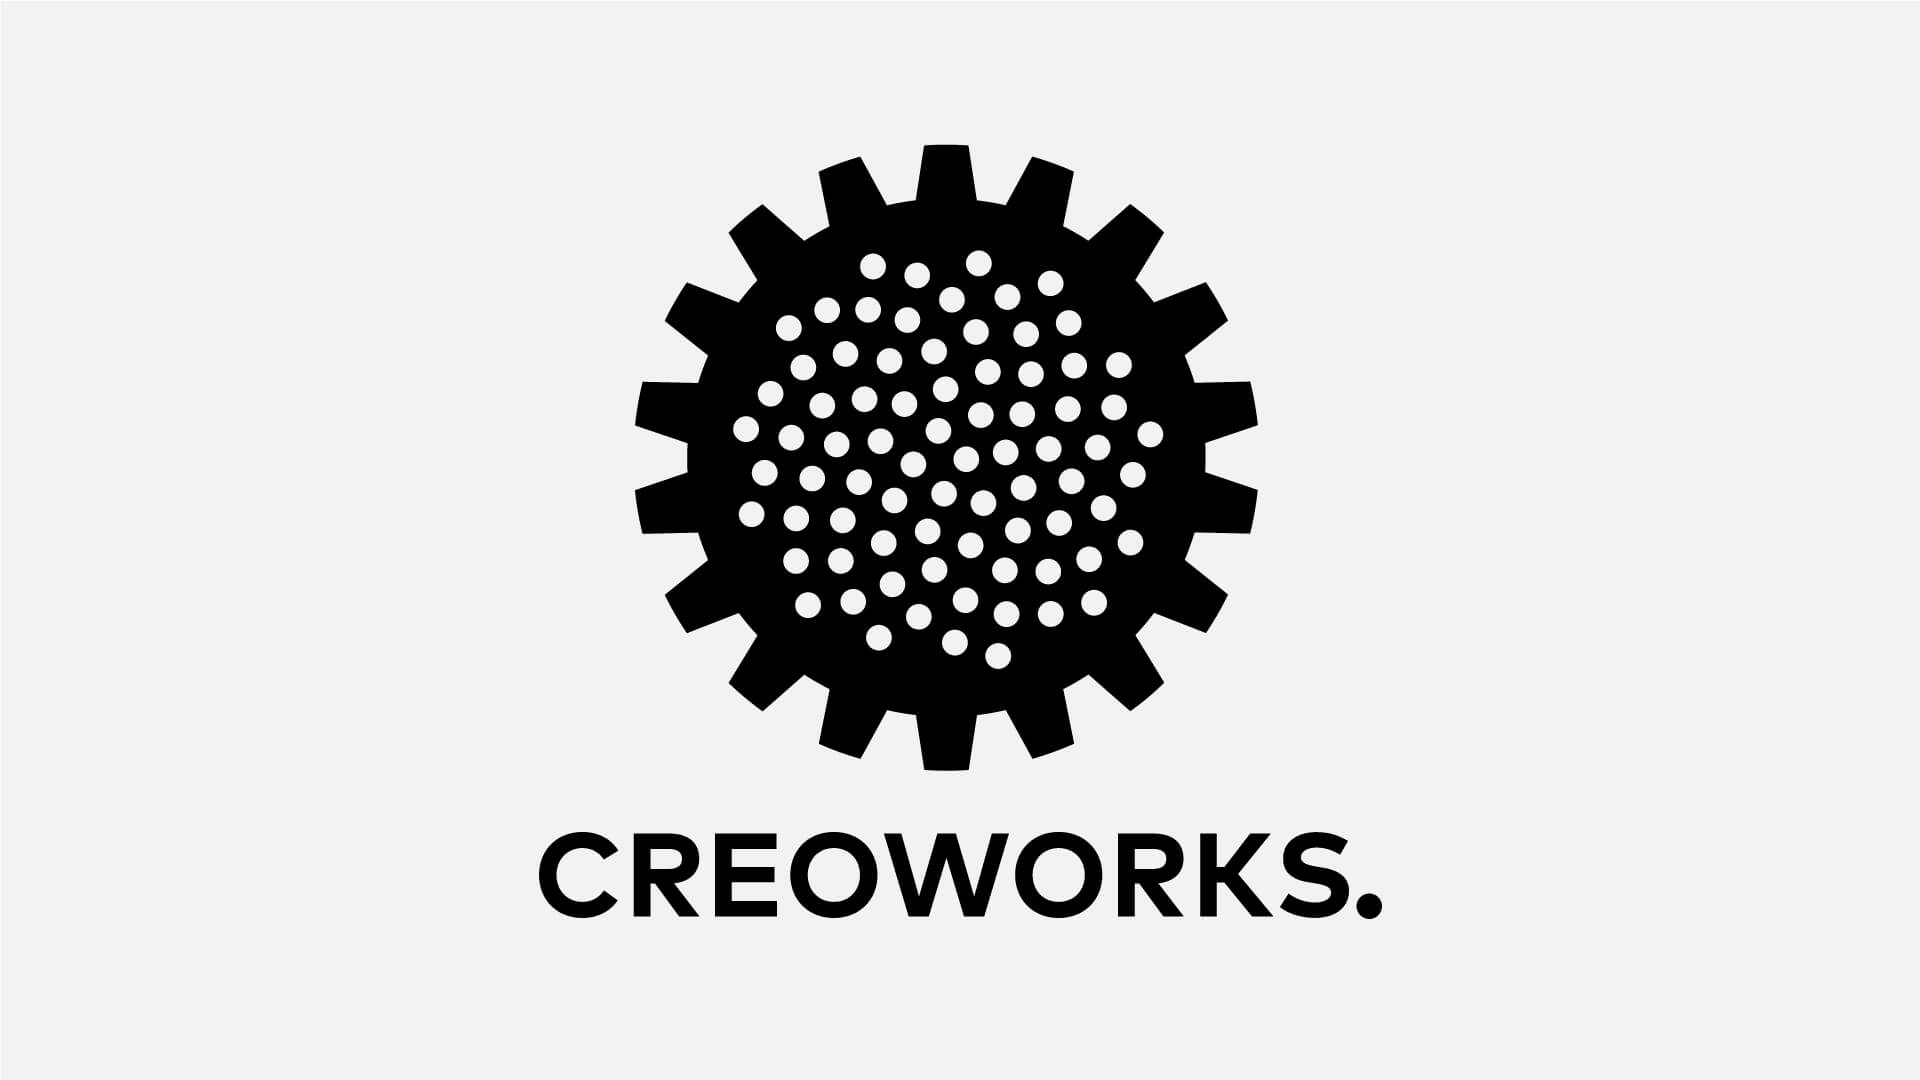 Creoworks-combination-logo-1920-x-1080